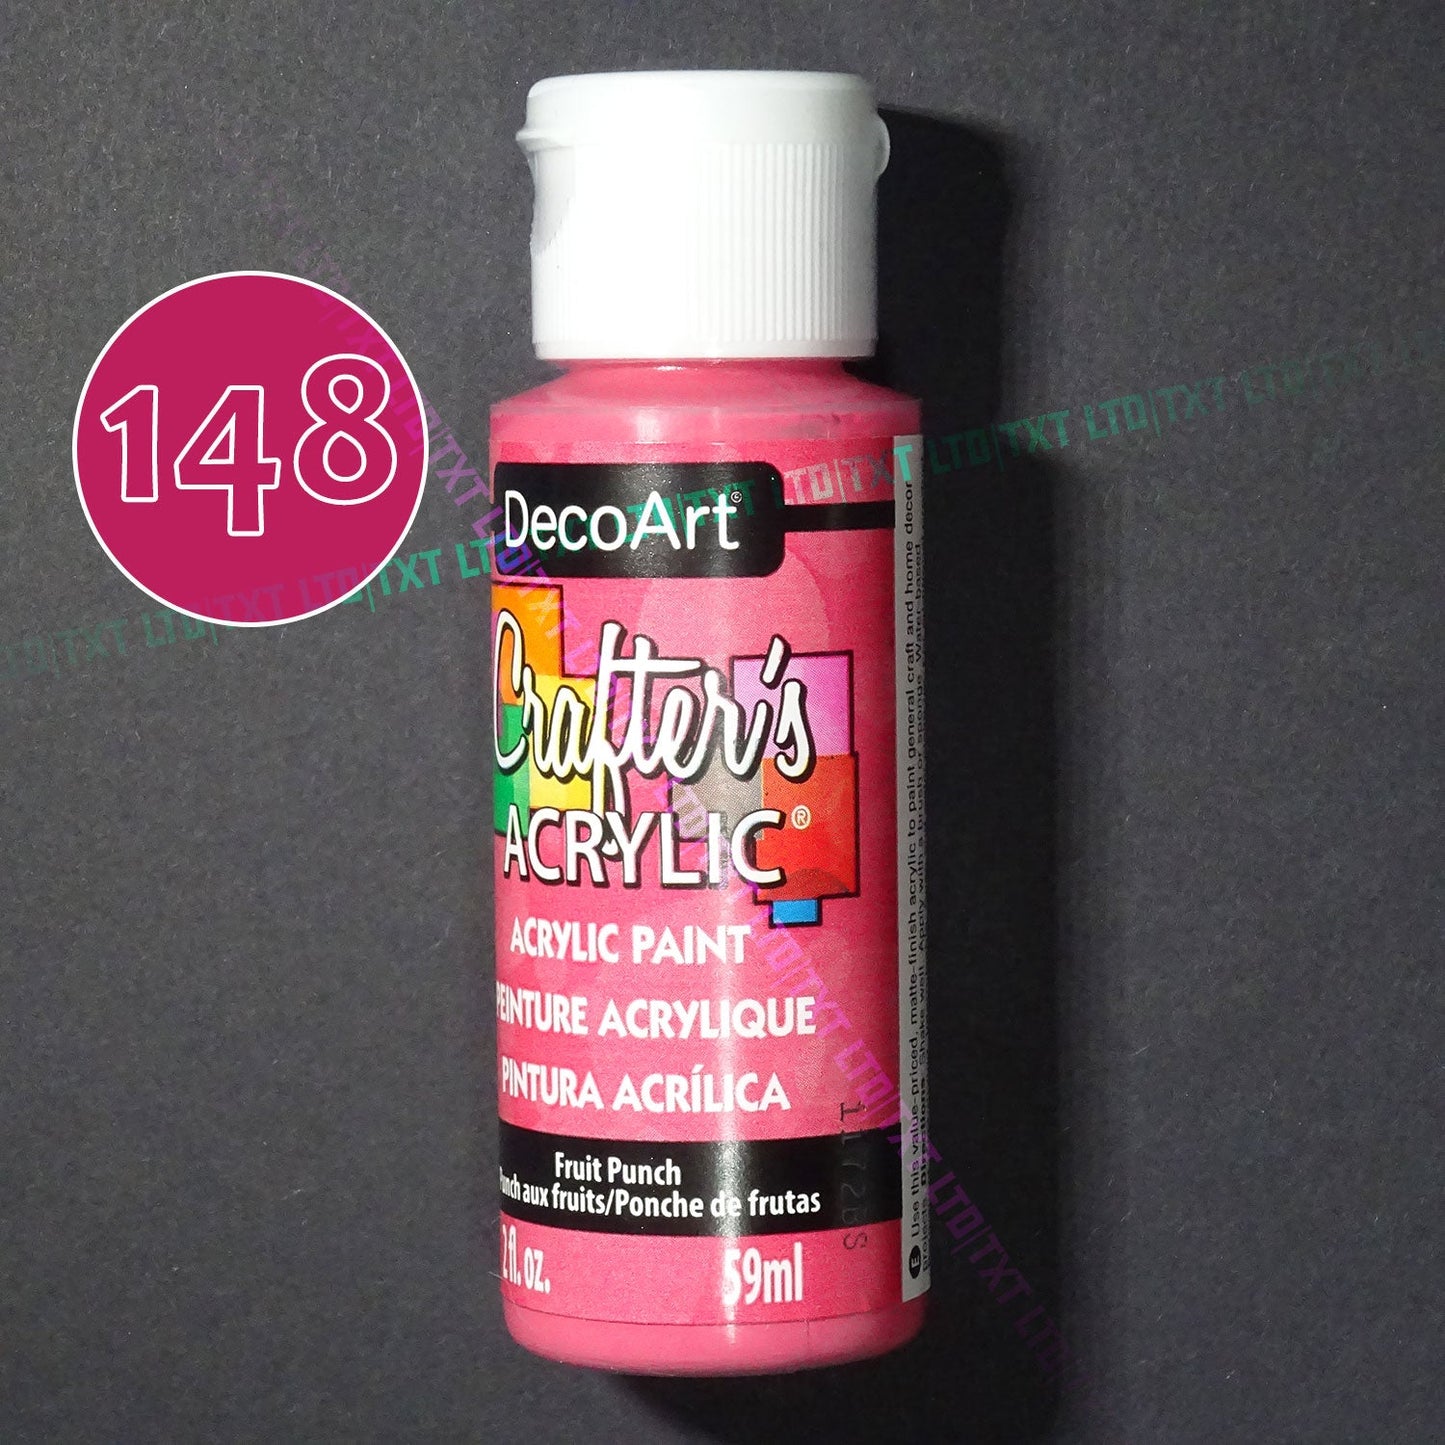 DecoArt Crafters Acryl, 59ml/2oz. [Farben 104 bis 173]